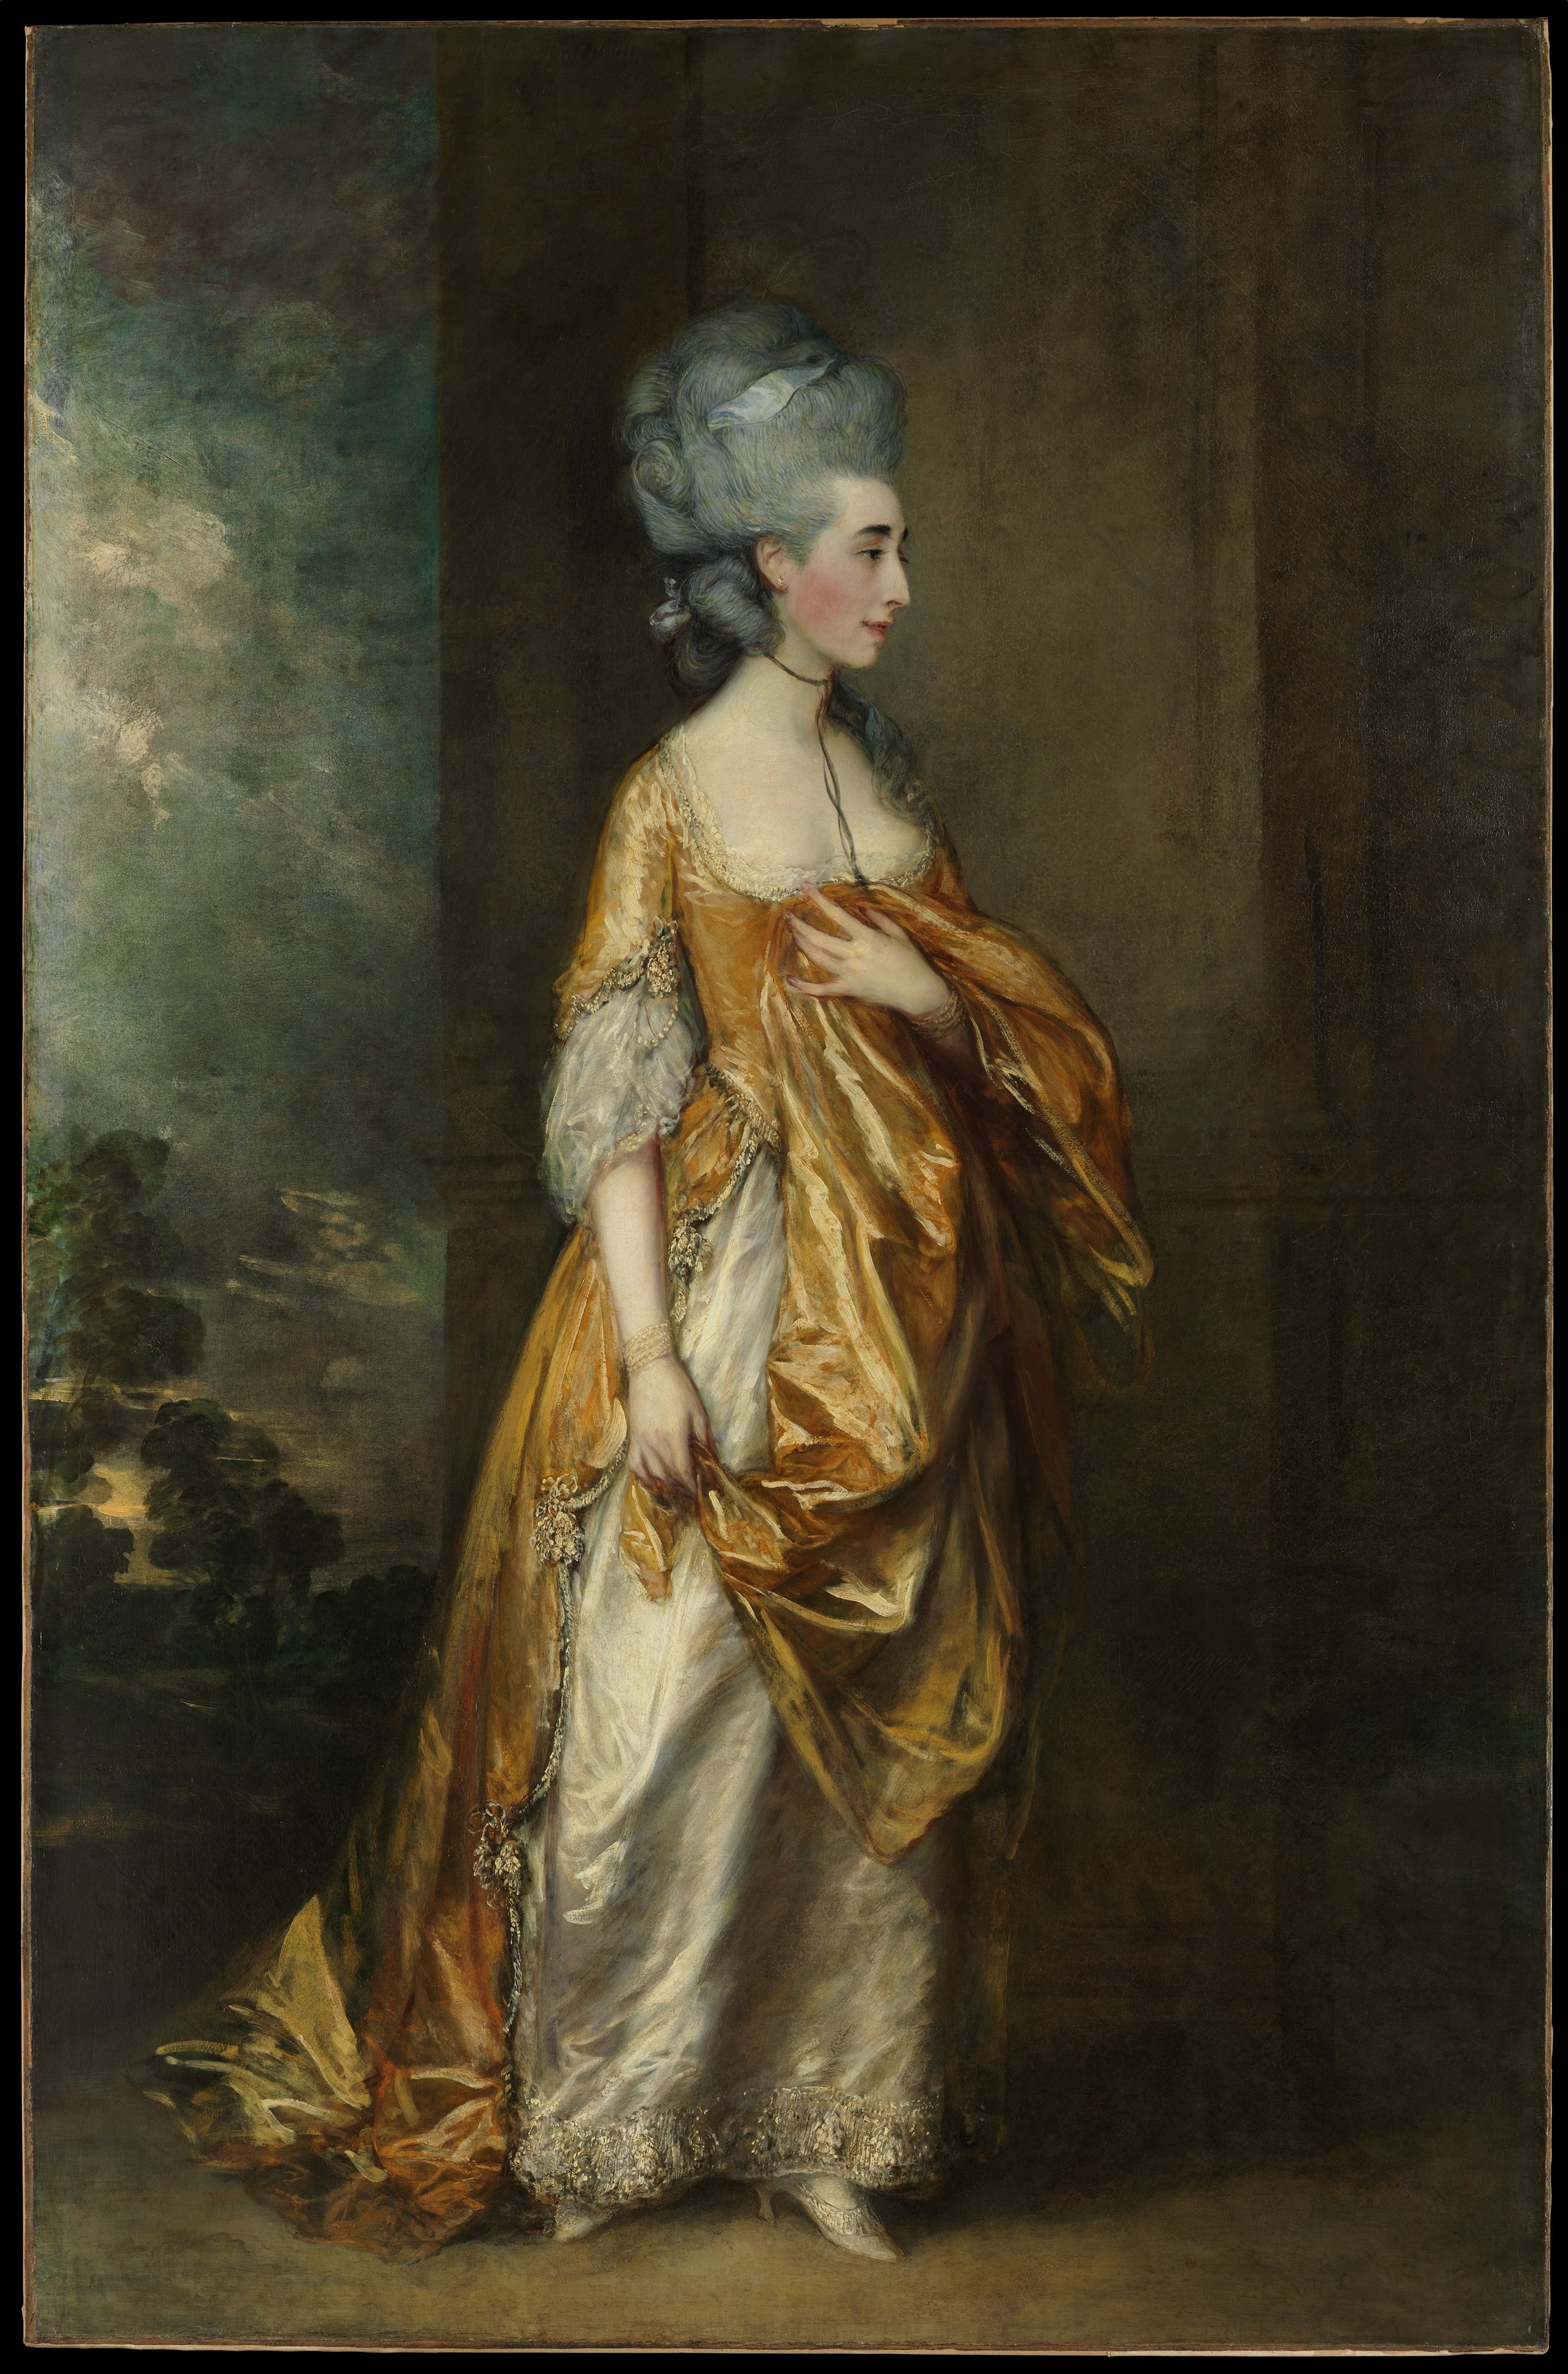 Grace Dalrymple Elliott asszony by Thomas Gainsborough - 1778 - 234,3 x 153,7 cm 